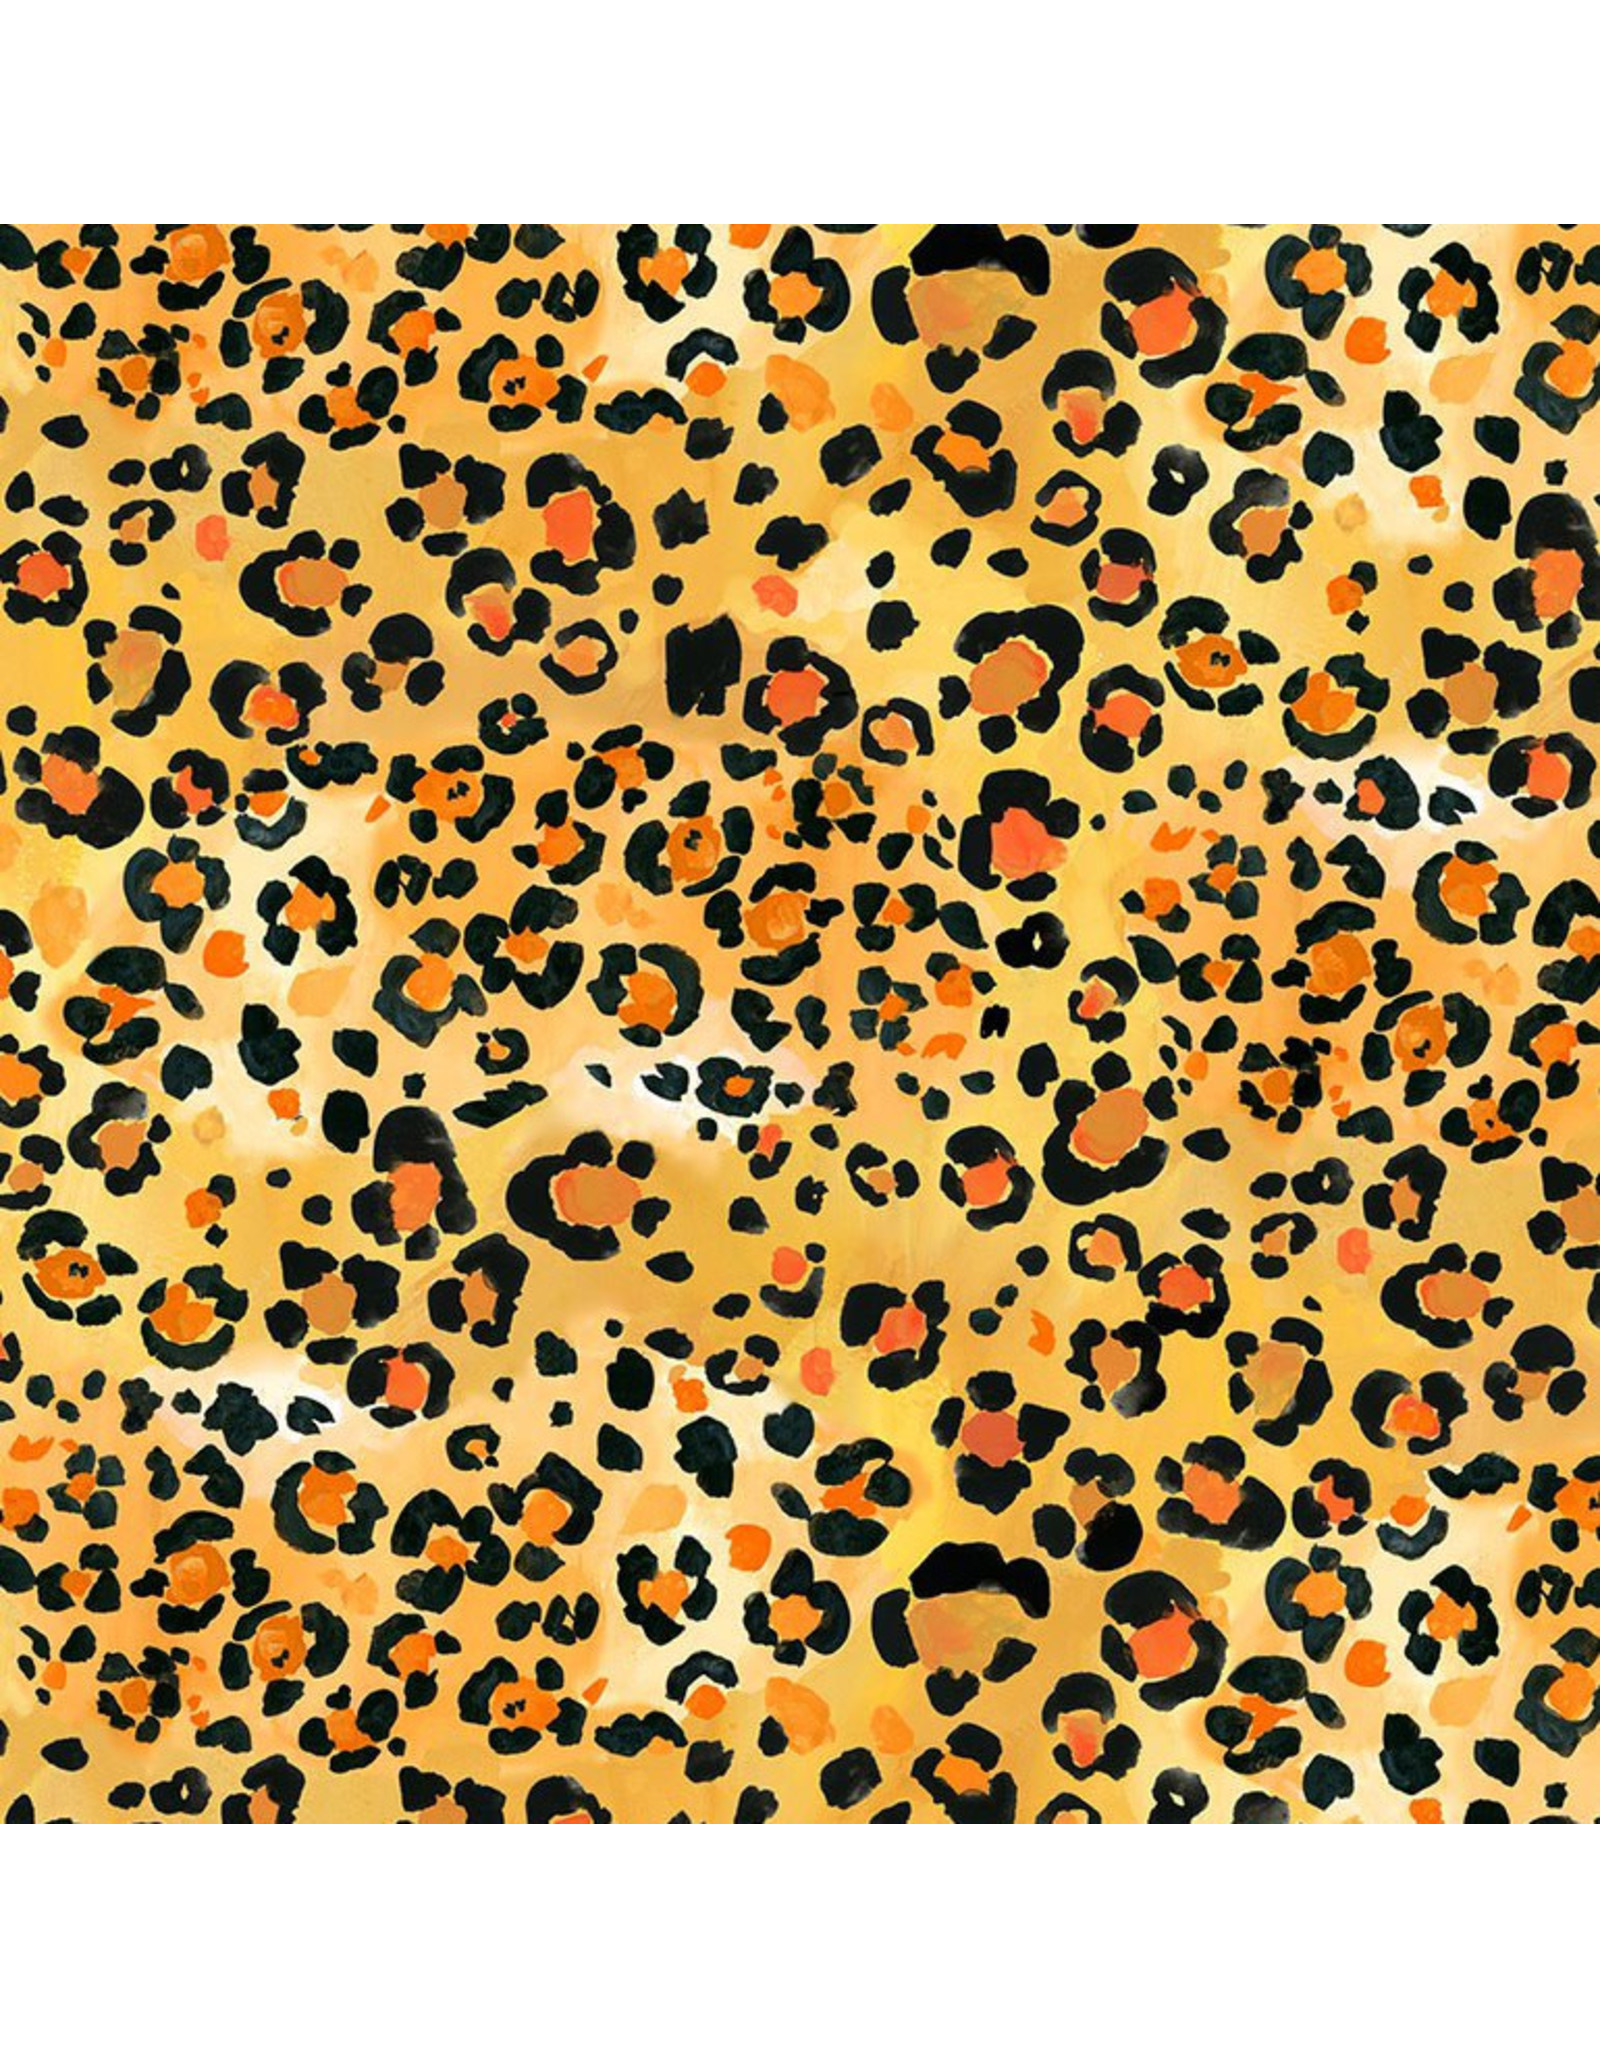 August Wren Paradise Found, Leopard Skin in Gold, Fabric Half-Yards